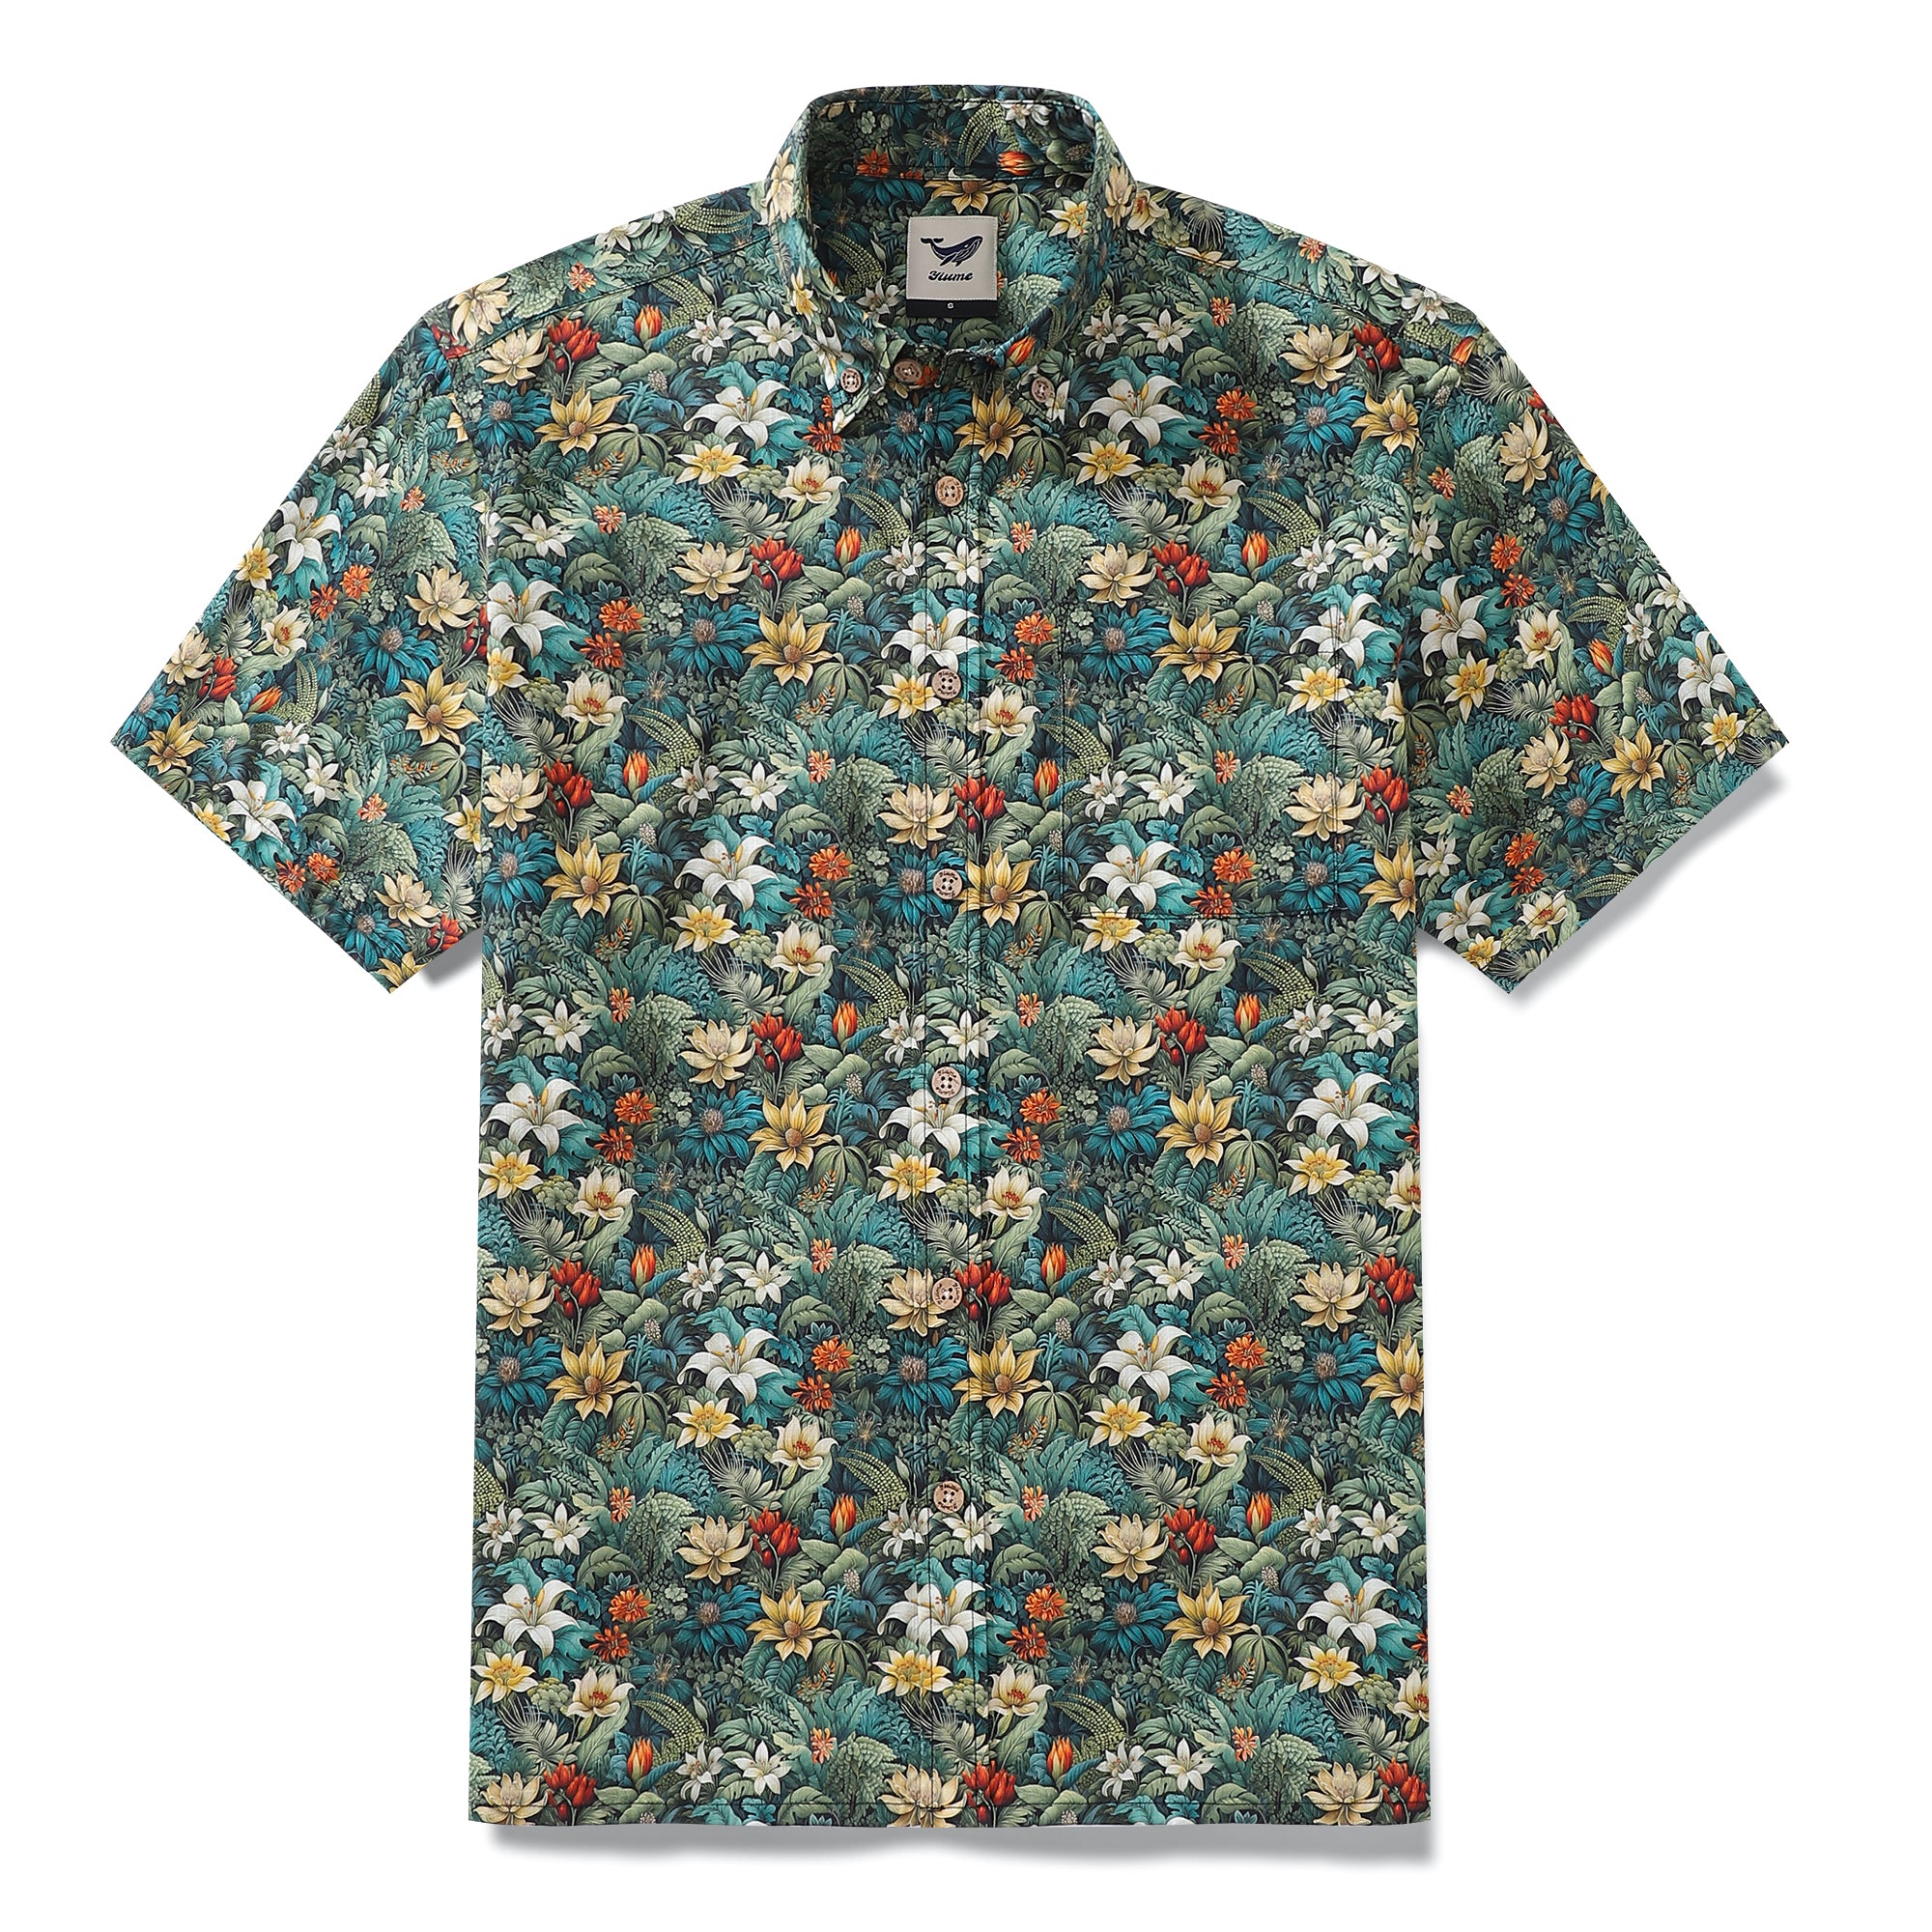 Men's Hawaiian Shirt Jungle Adventure Print Cotton Button-down Short Sleeve Aloha Shirt